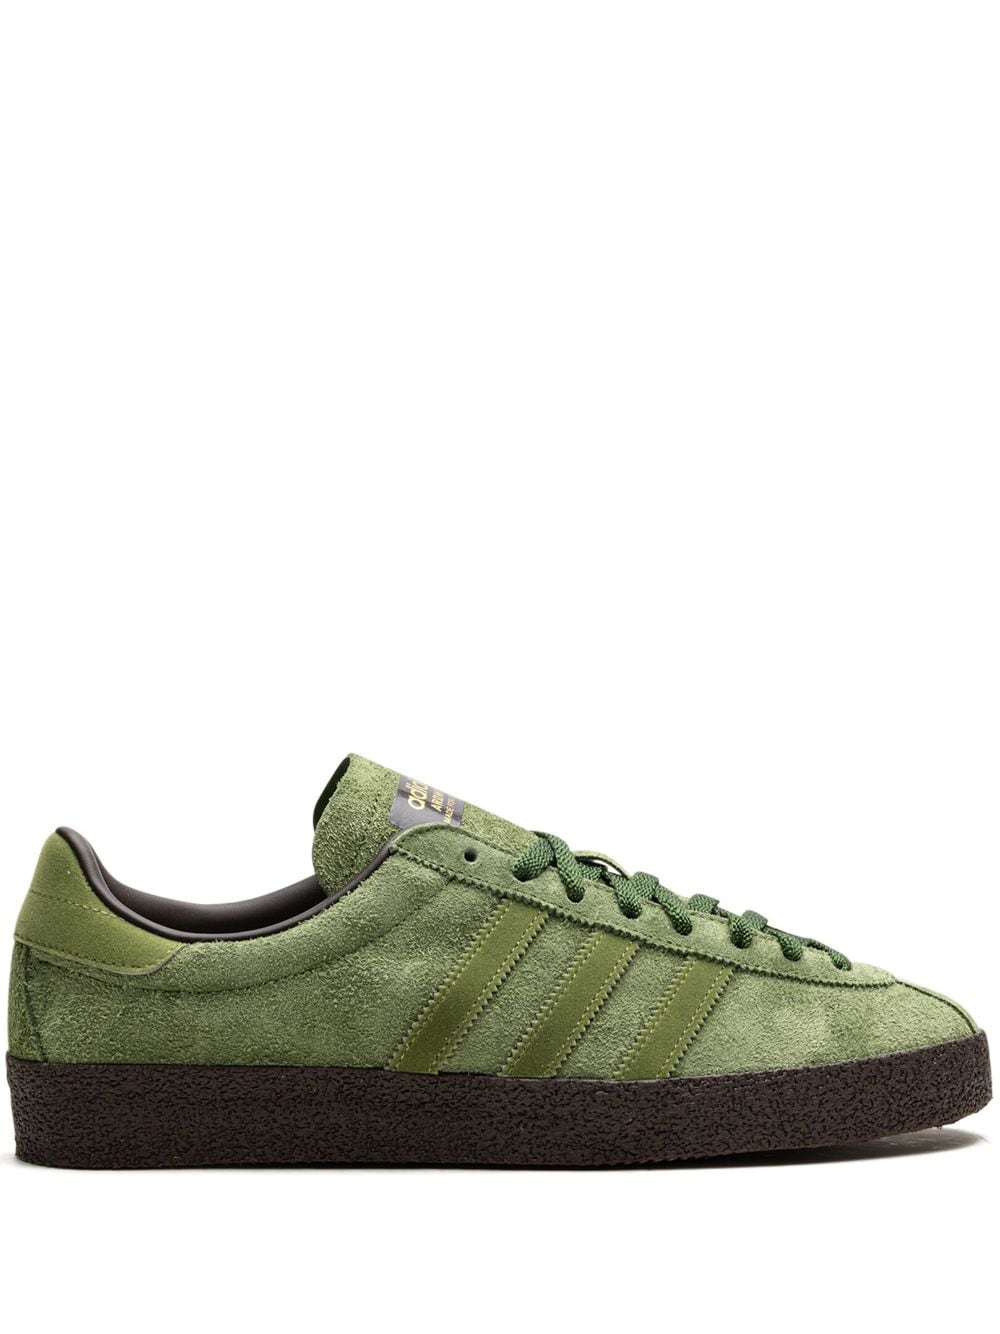 Adidas Ardwick SPZL "Craft Green" sneakers